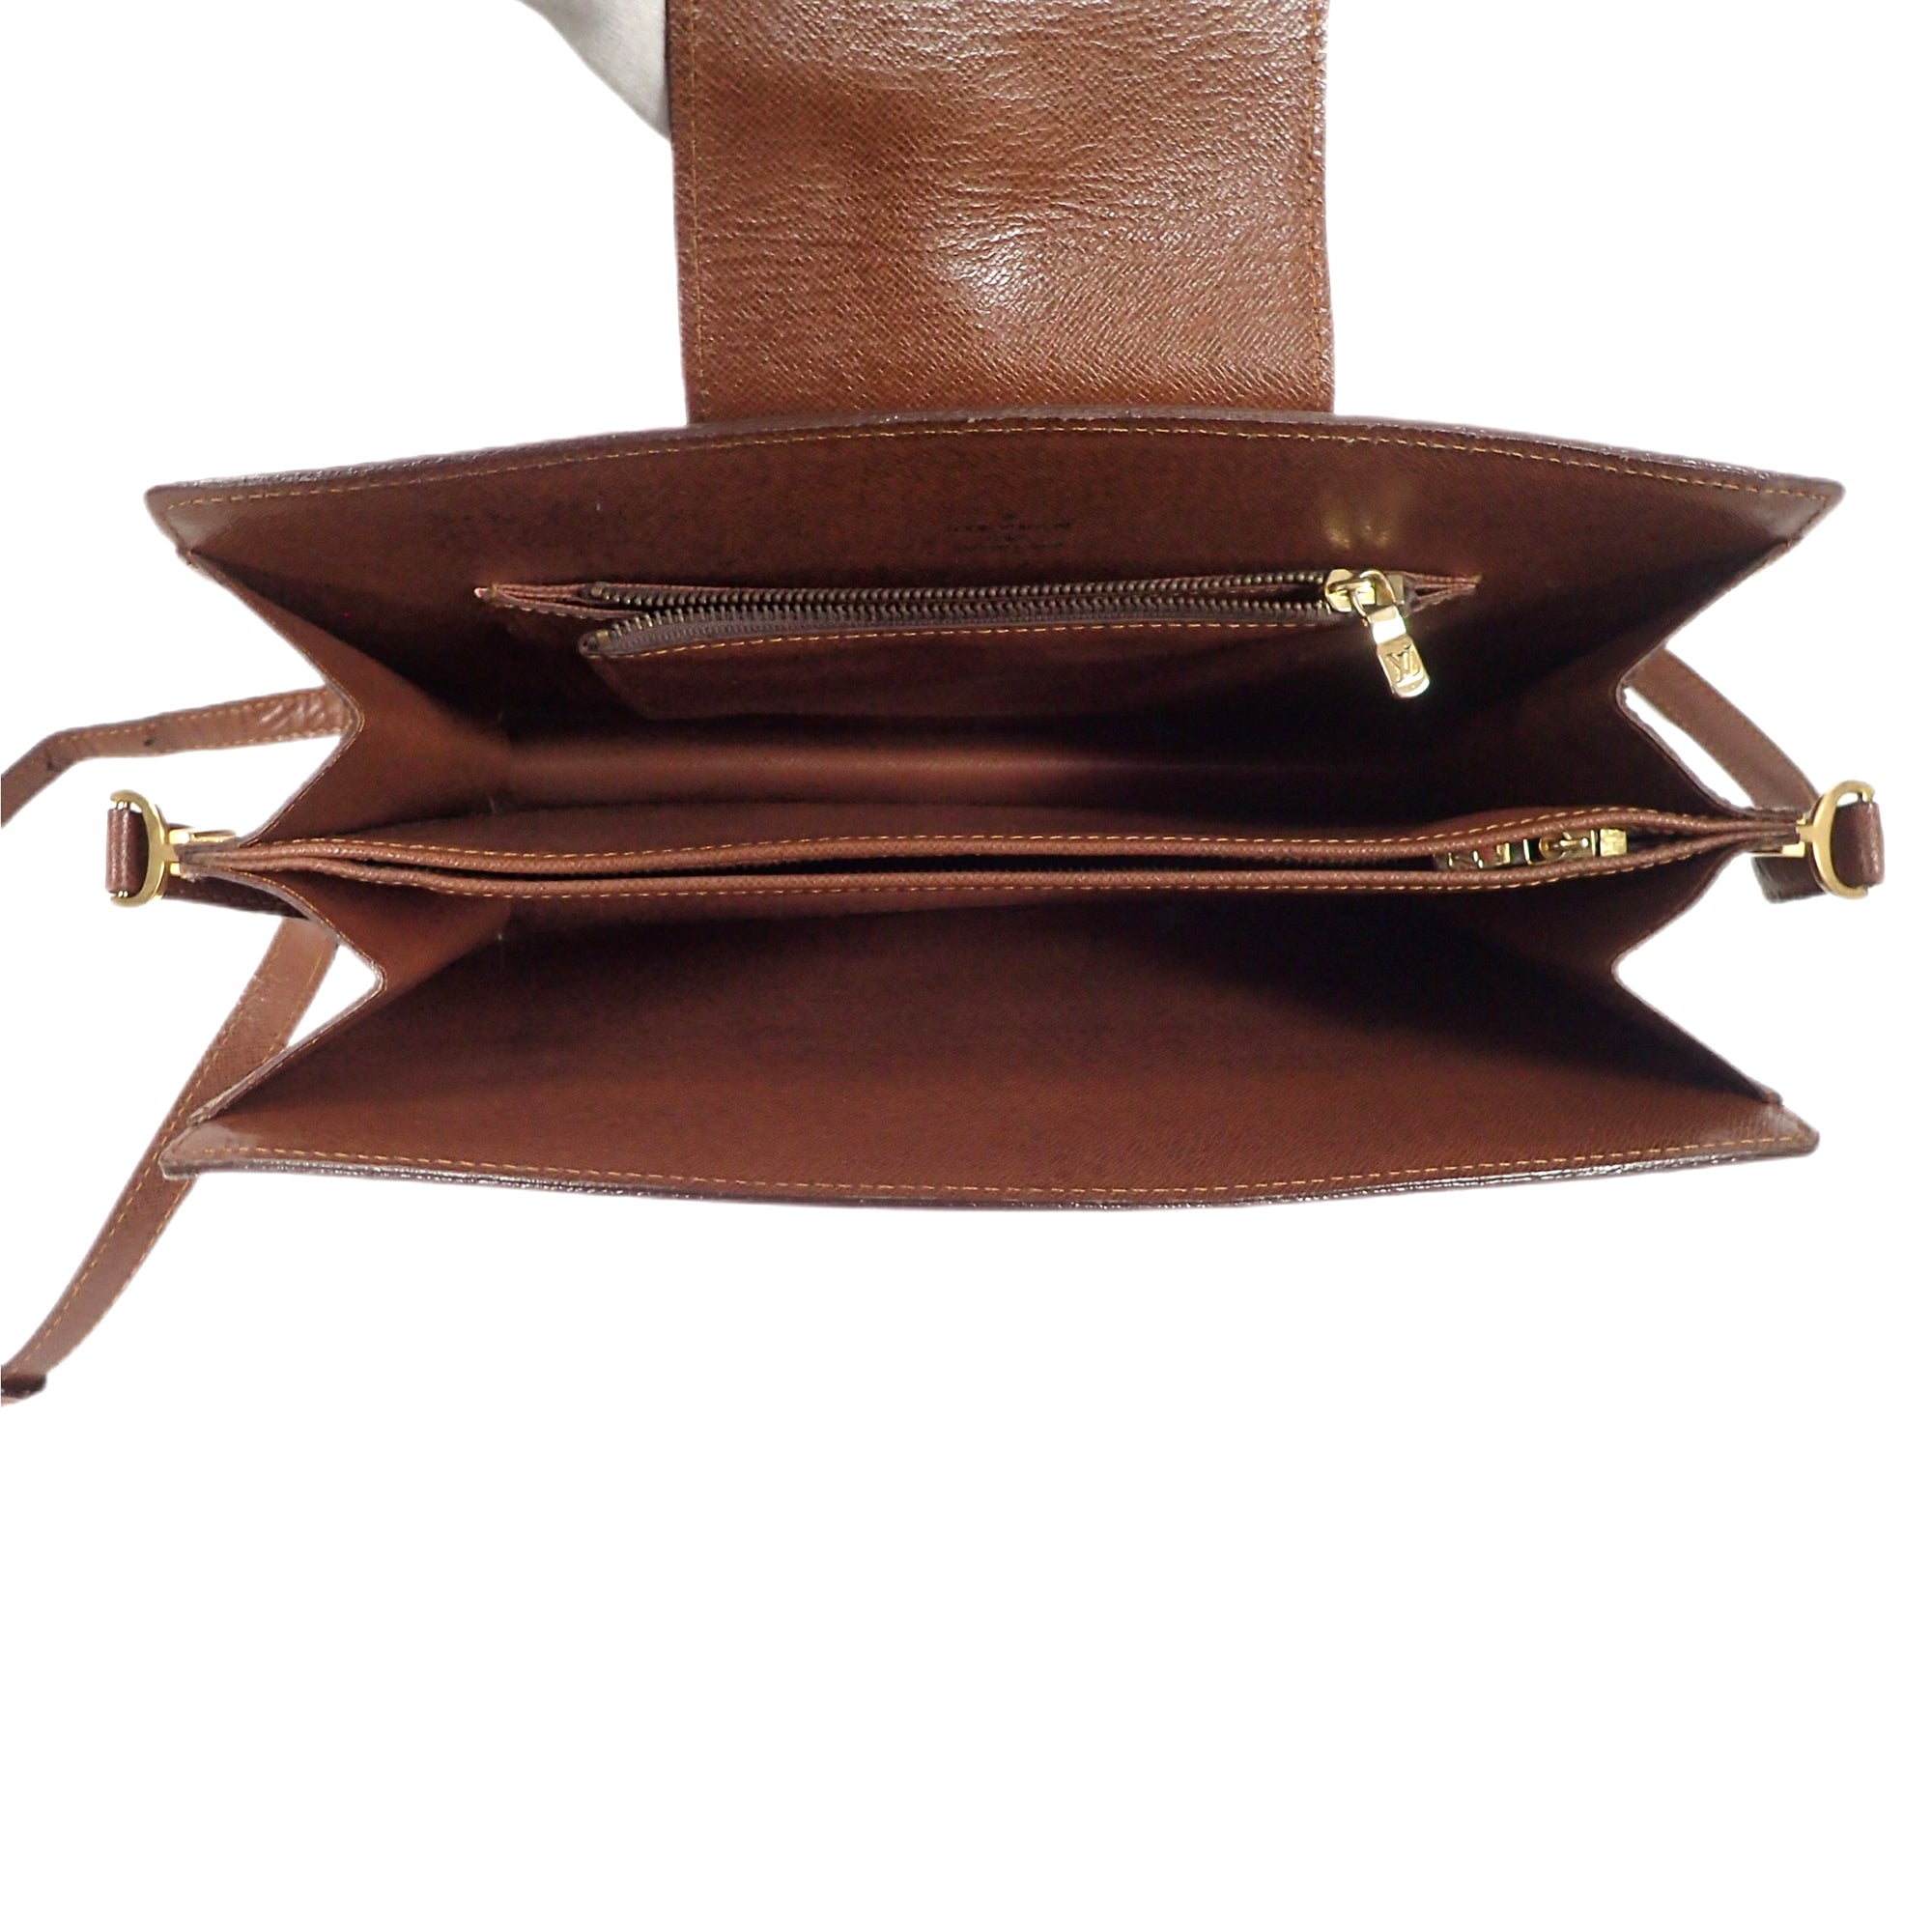 Vintage Sac MY - Louis Vuitton Courcelles Bag! ❤️ Great